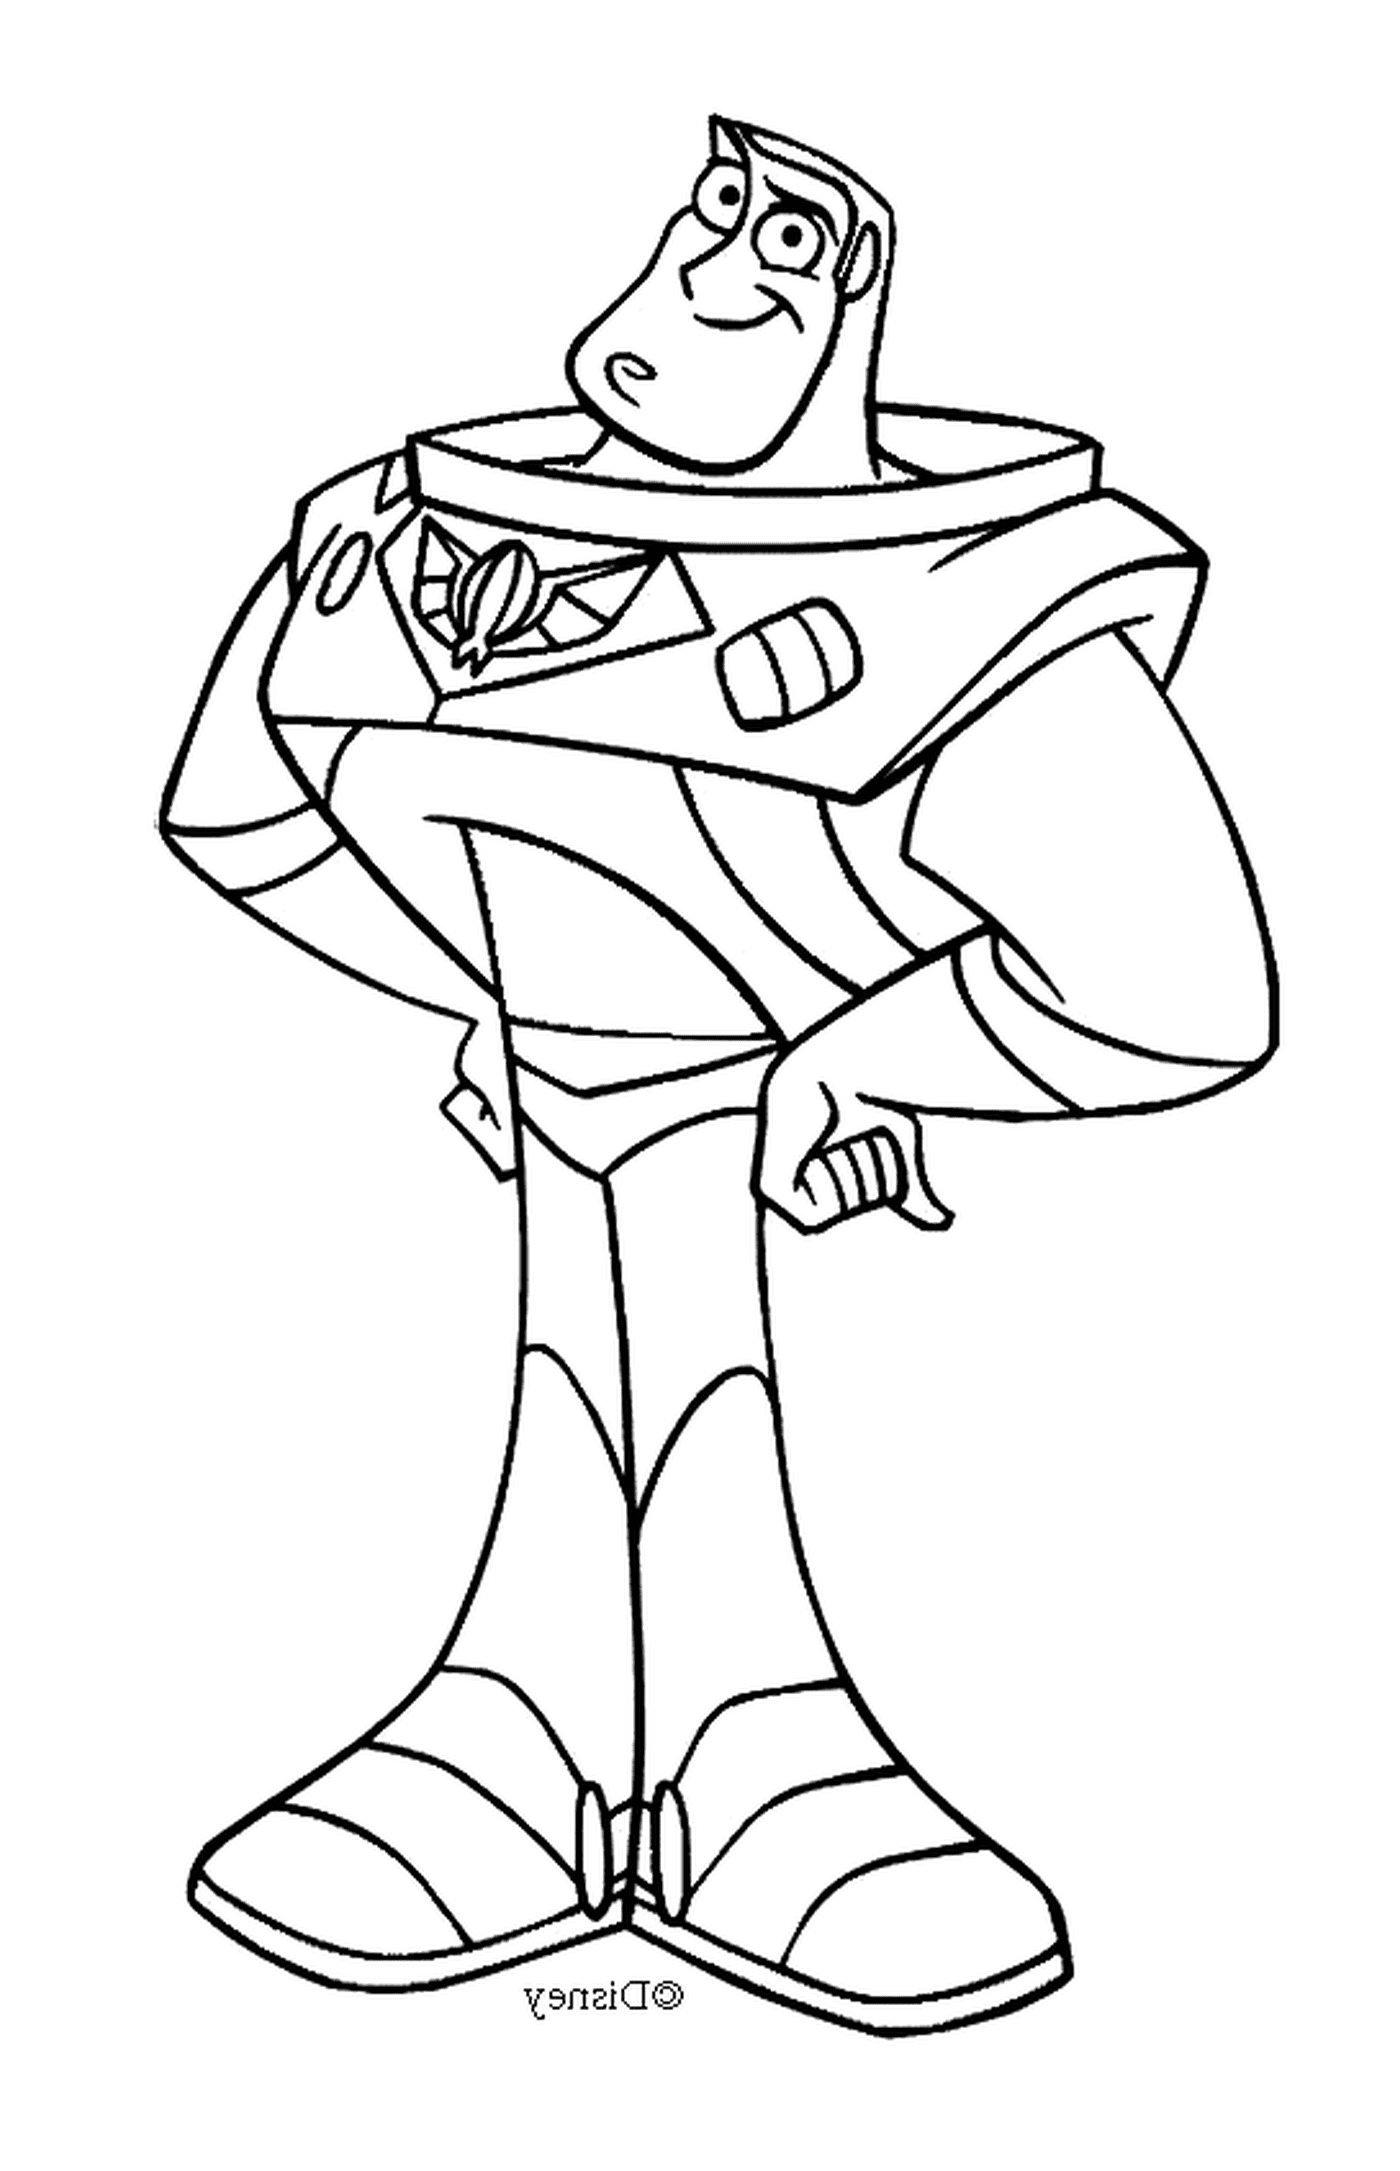  Buzz the Ranger of space, intrepid adventurer 